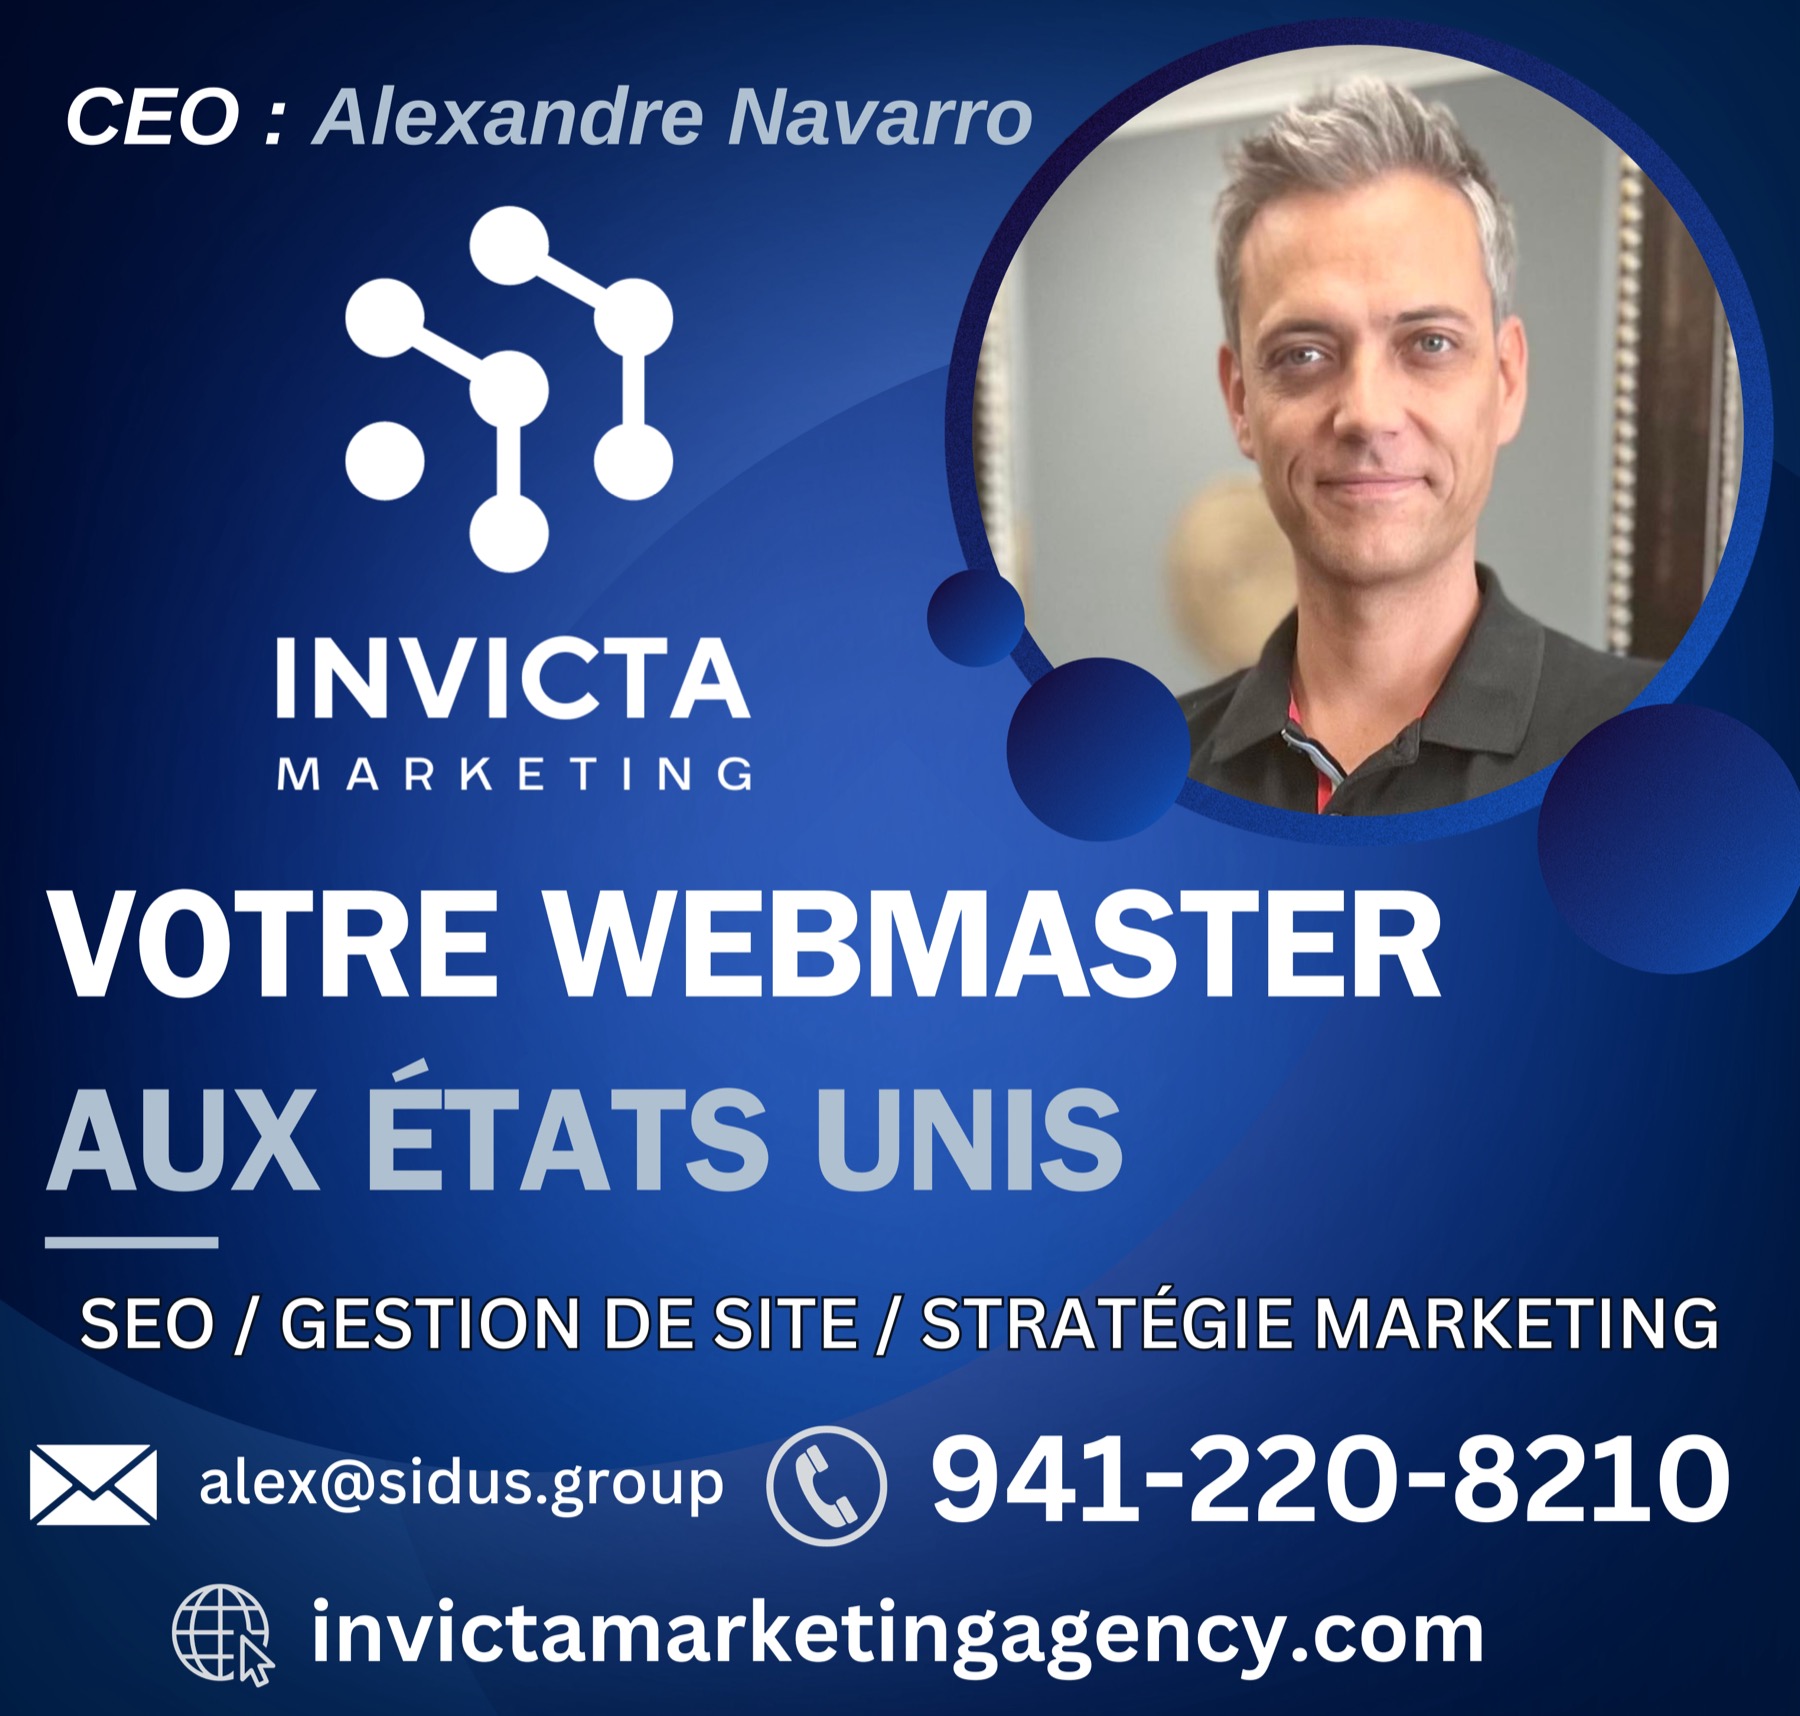 Invicta / Alexandre Navarro Webmaster aux Etats-Unis